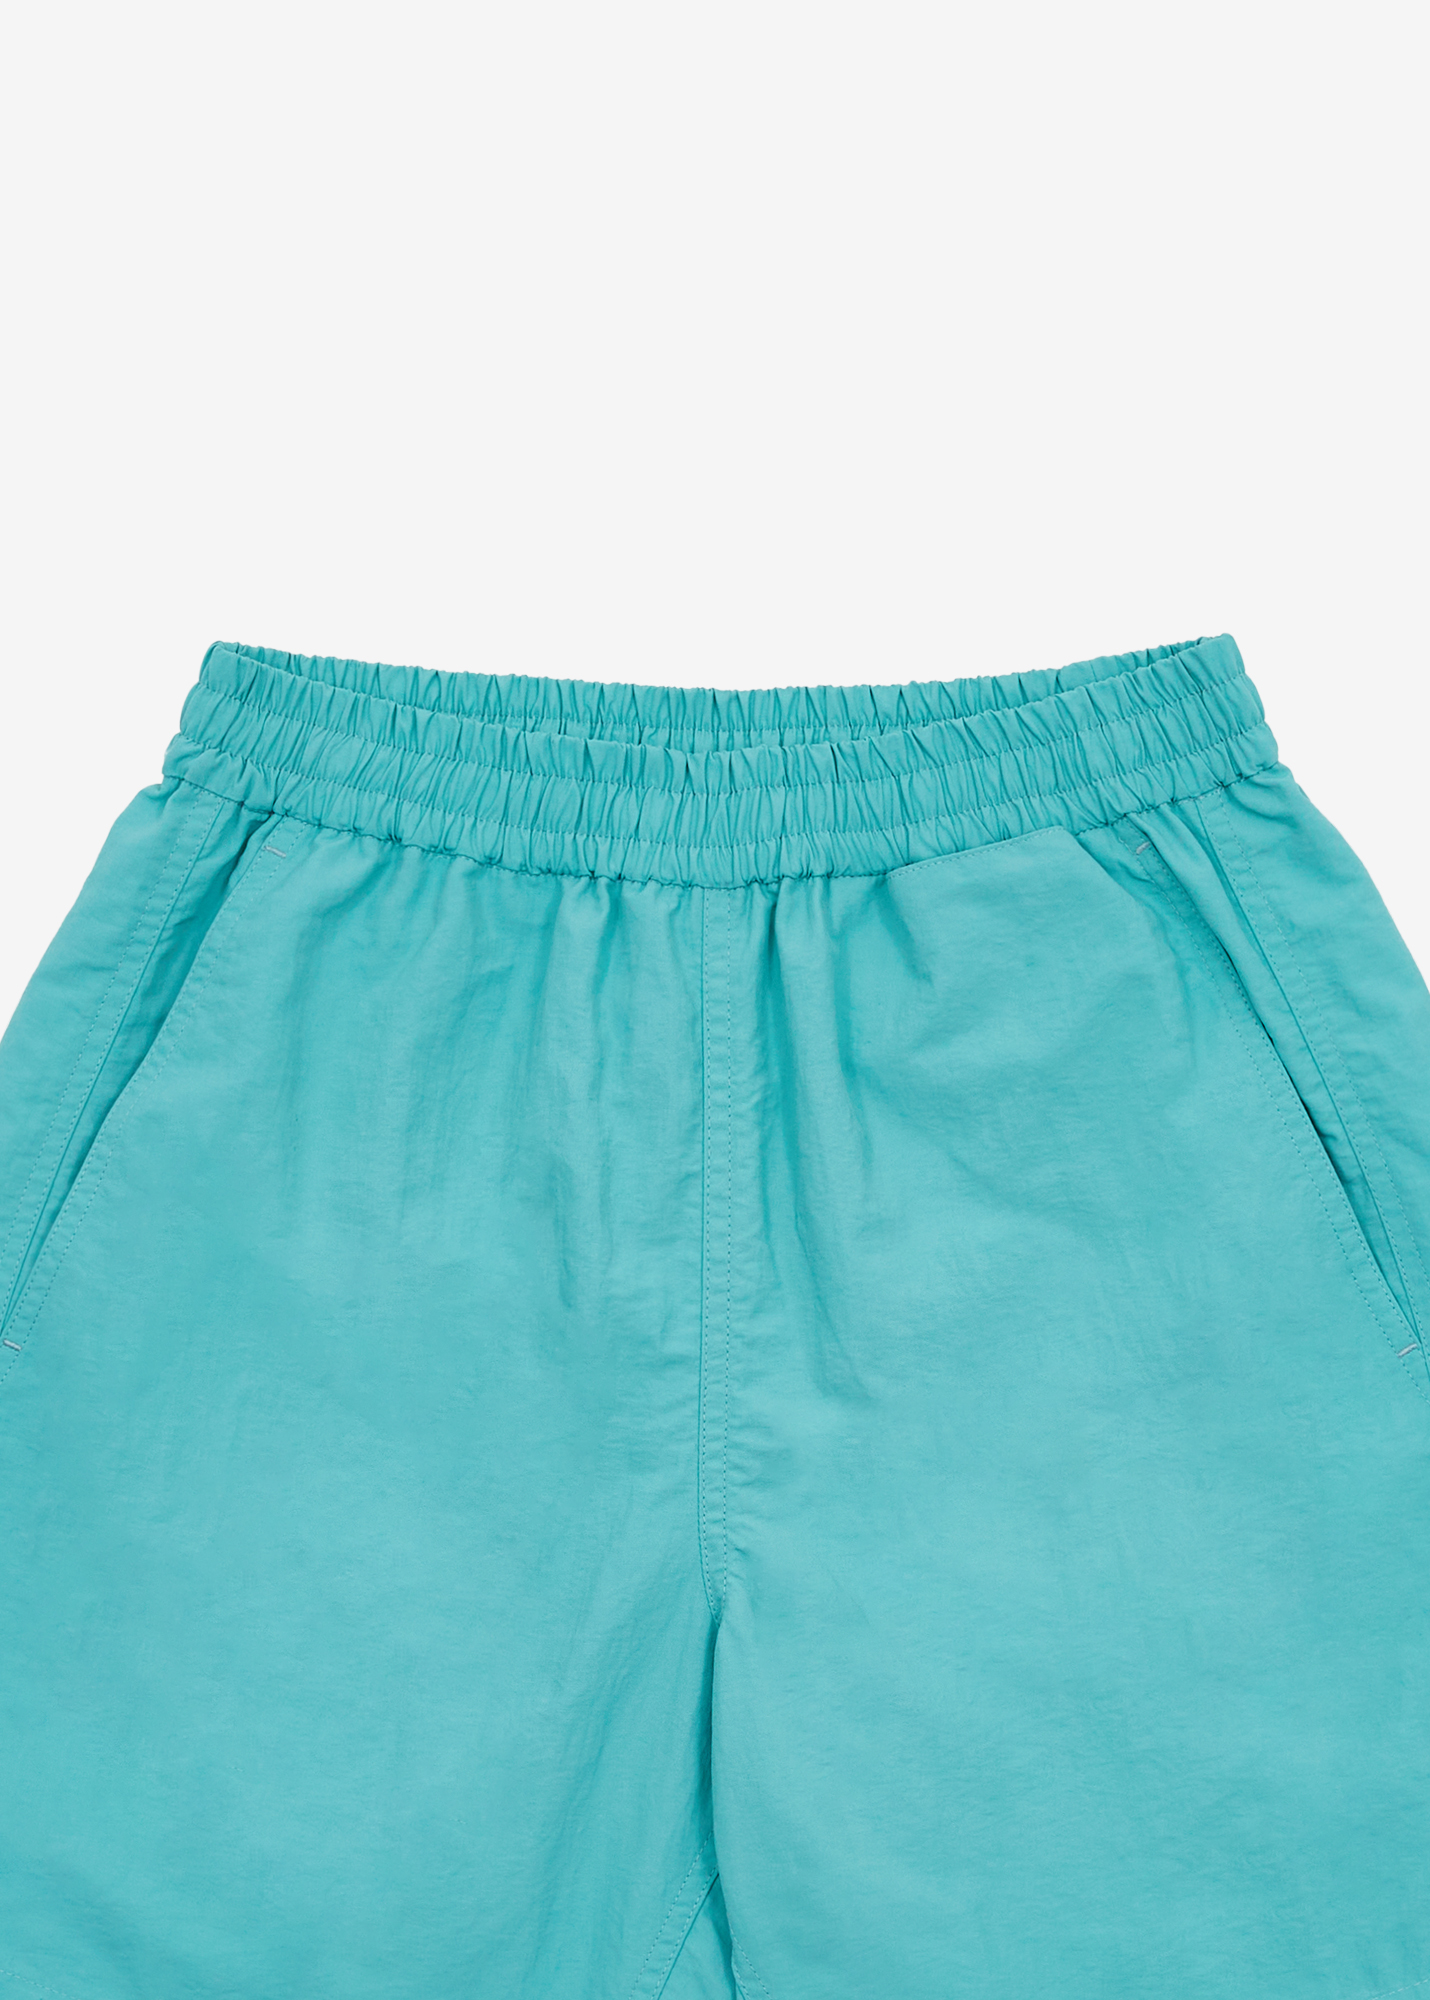 Pocket shorts pants - Mint